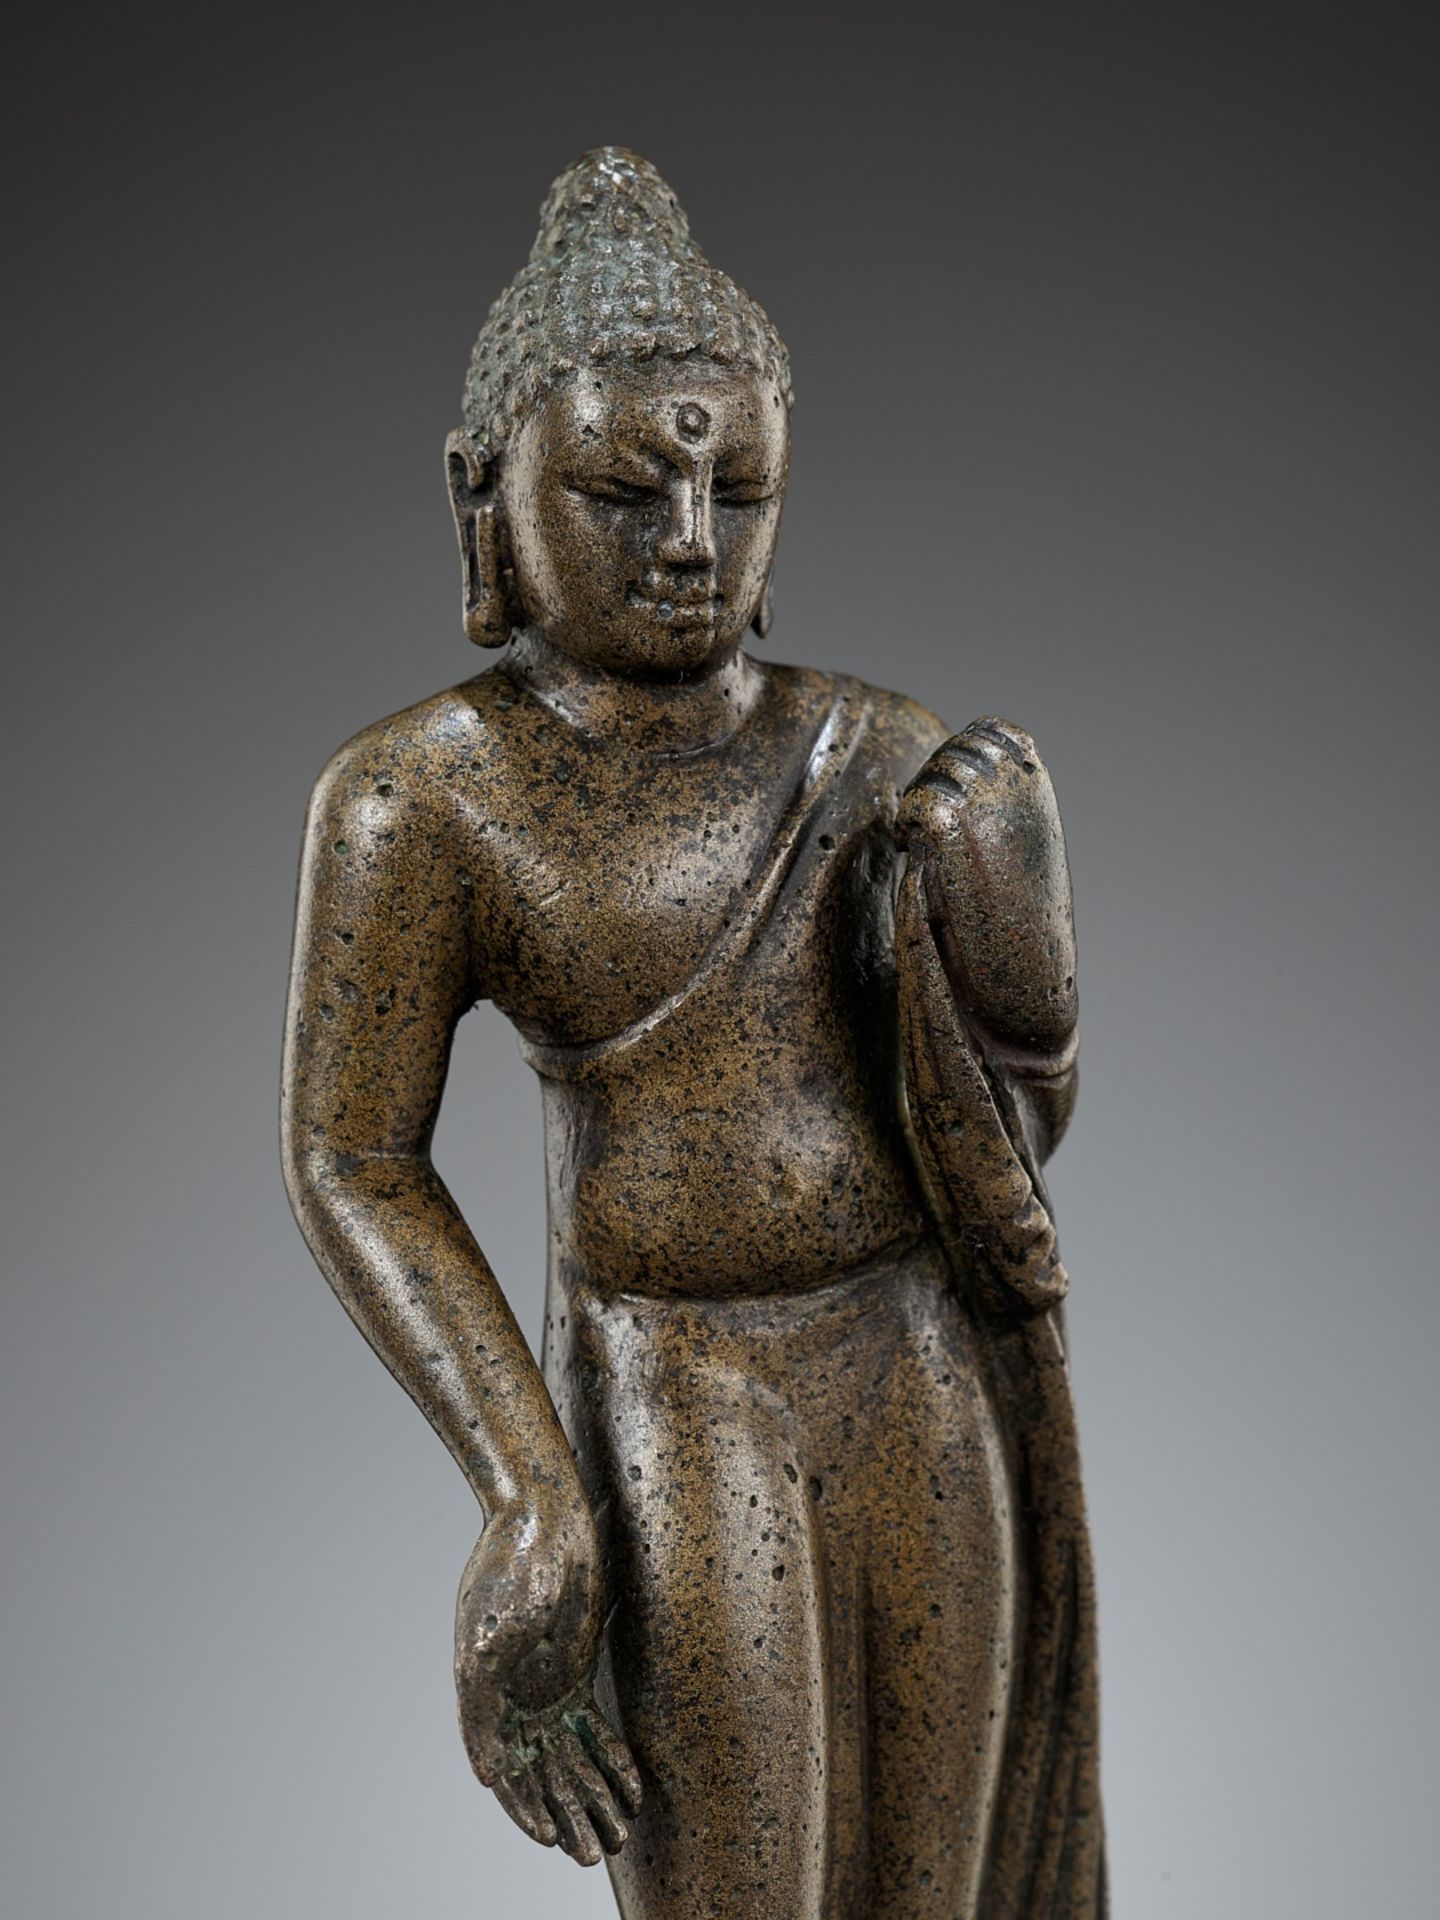 A BRONZE FIGURE OF A STANDING BUDDHA, POST-GUPTA PERIOD, INDIA, C. 7TH CENTURY